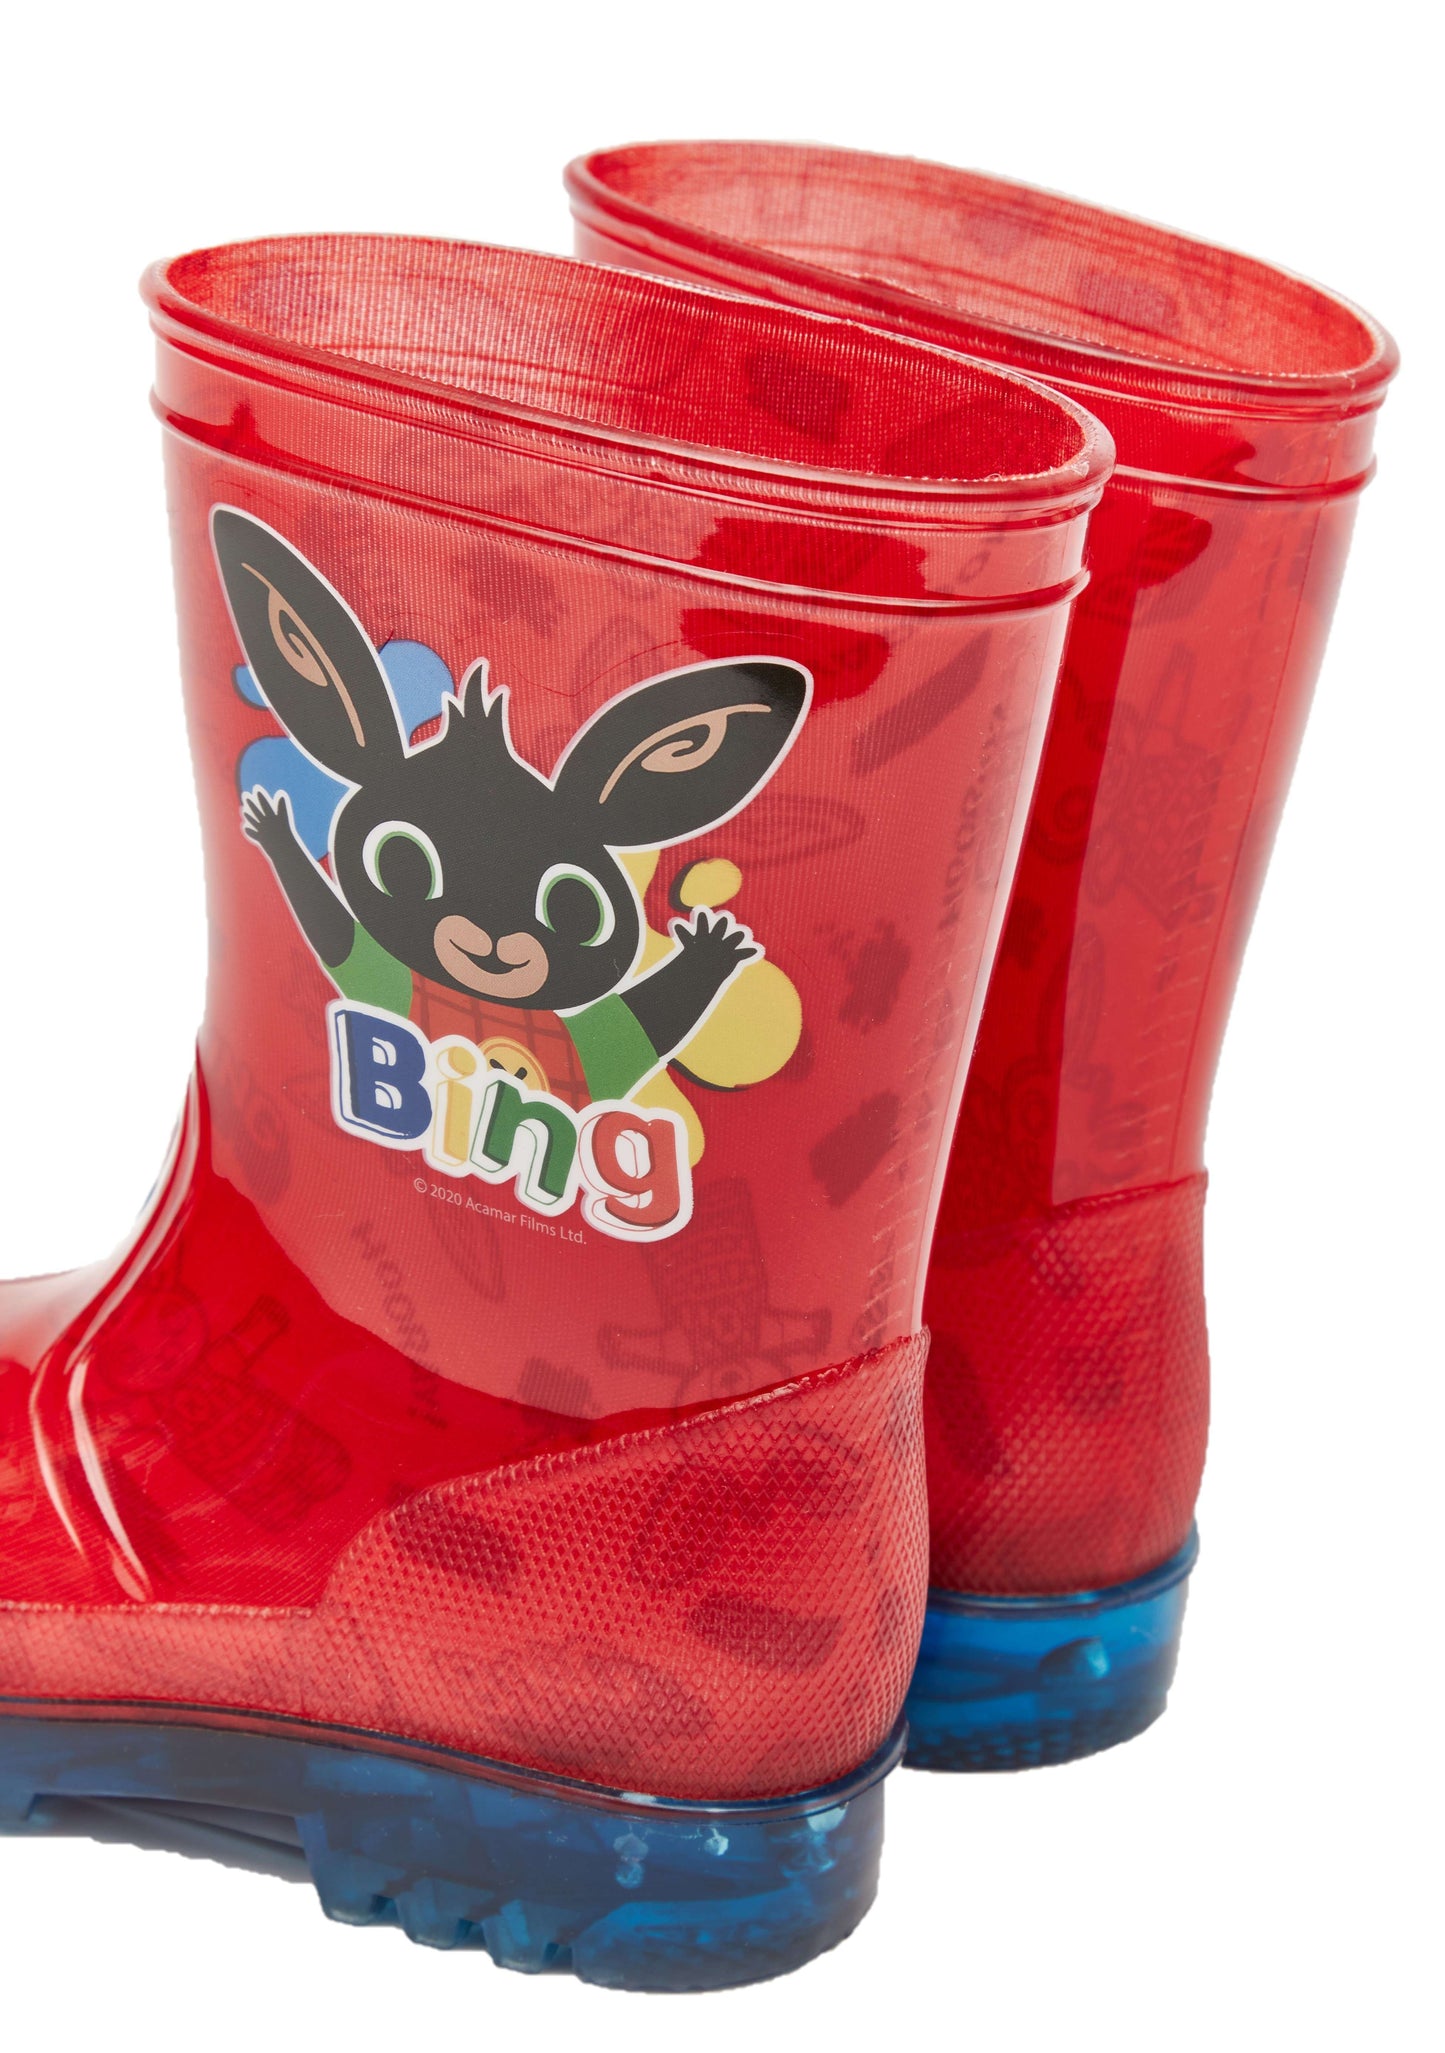 Bing Bunny Boys PVC Wellies Rain Boots